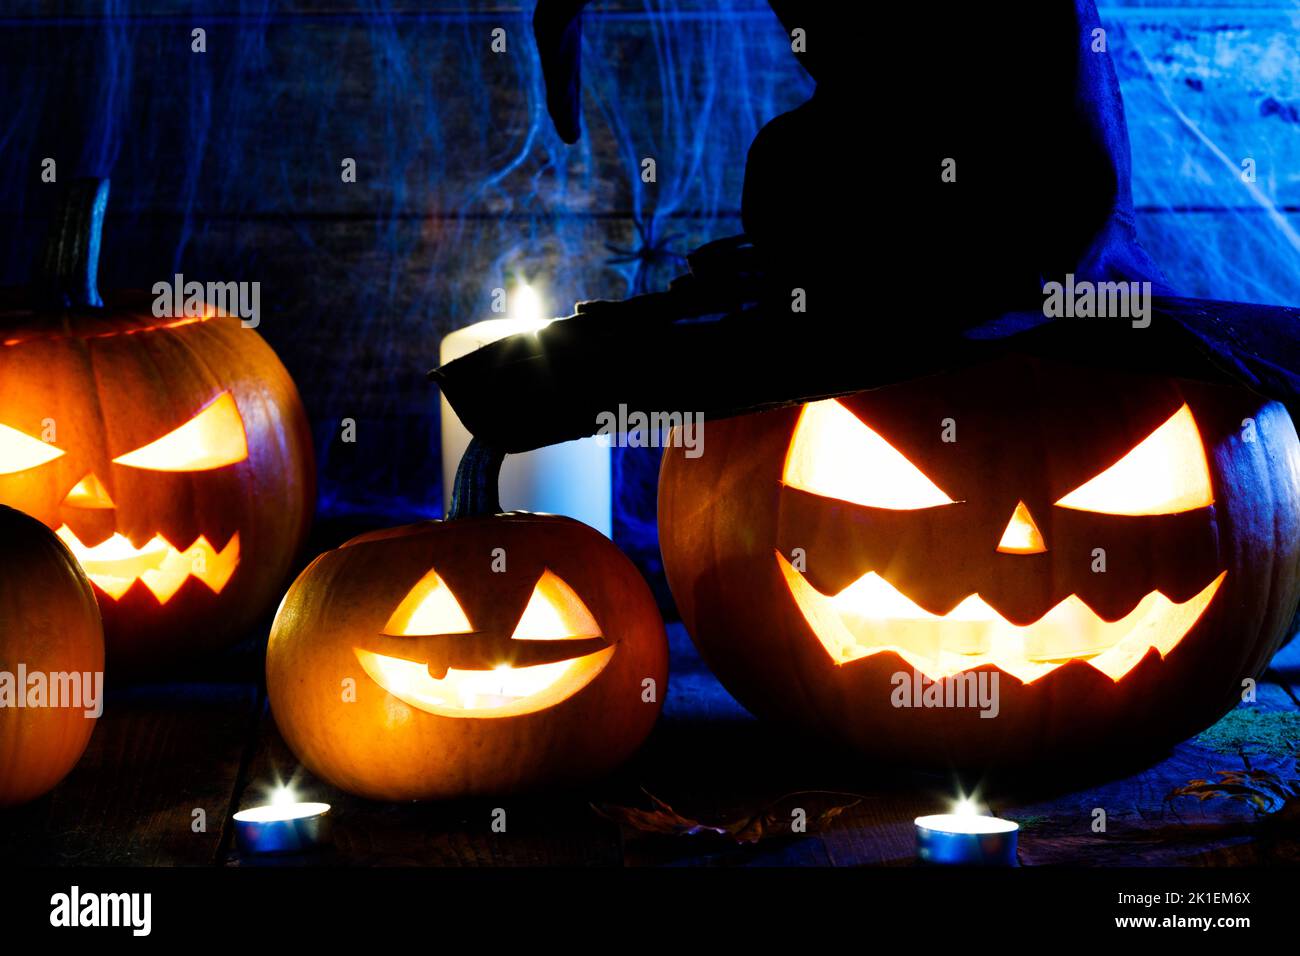 Festive mystical halloween interior. Pumpkin, spider web, burning candles, spiders on dark wooden background Stock Photo